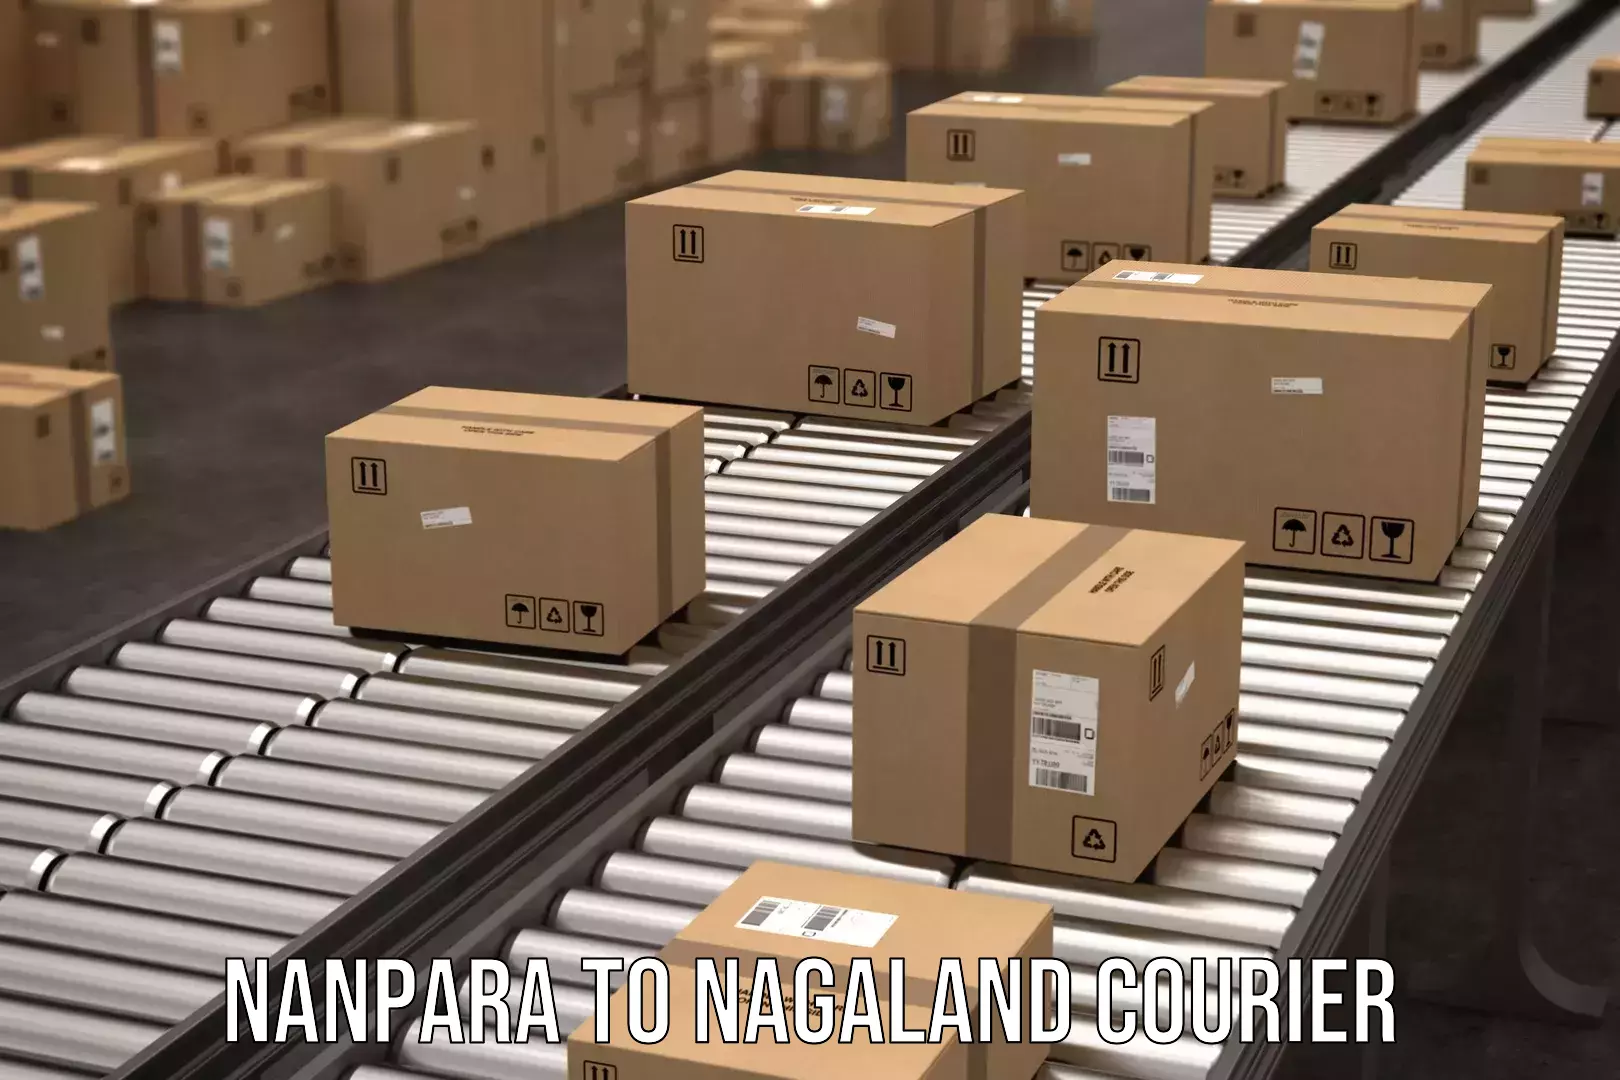 International courier networks Nanpara to Nagaland